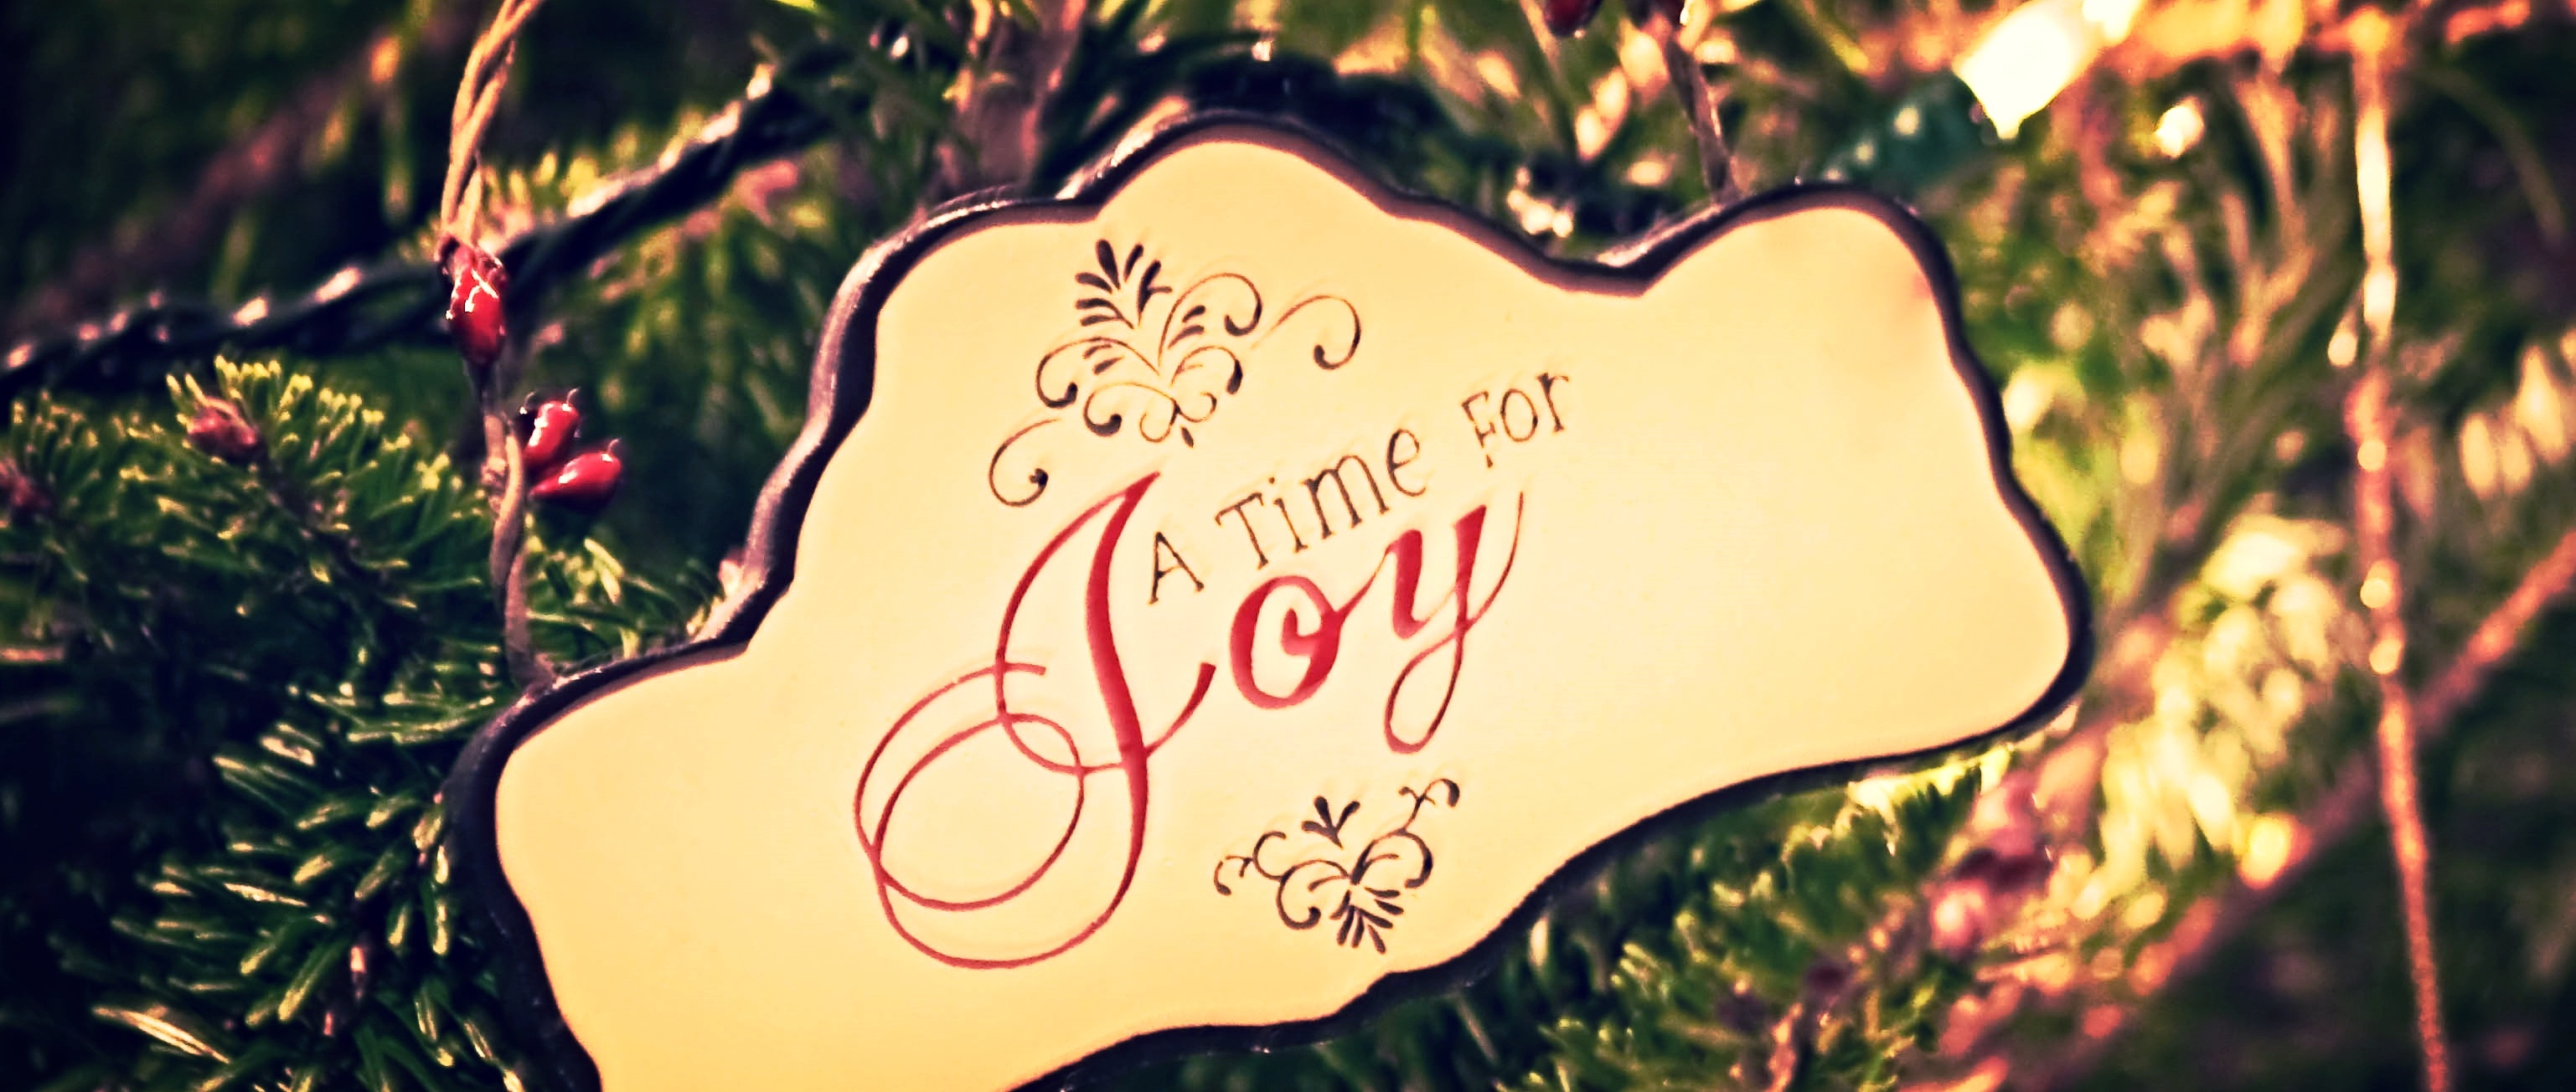 Christmas tree ornament that says Joy